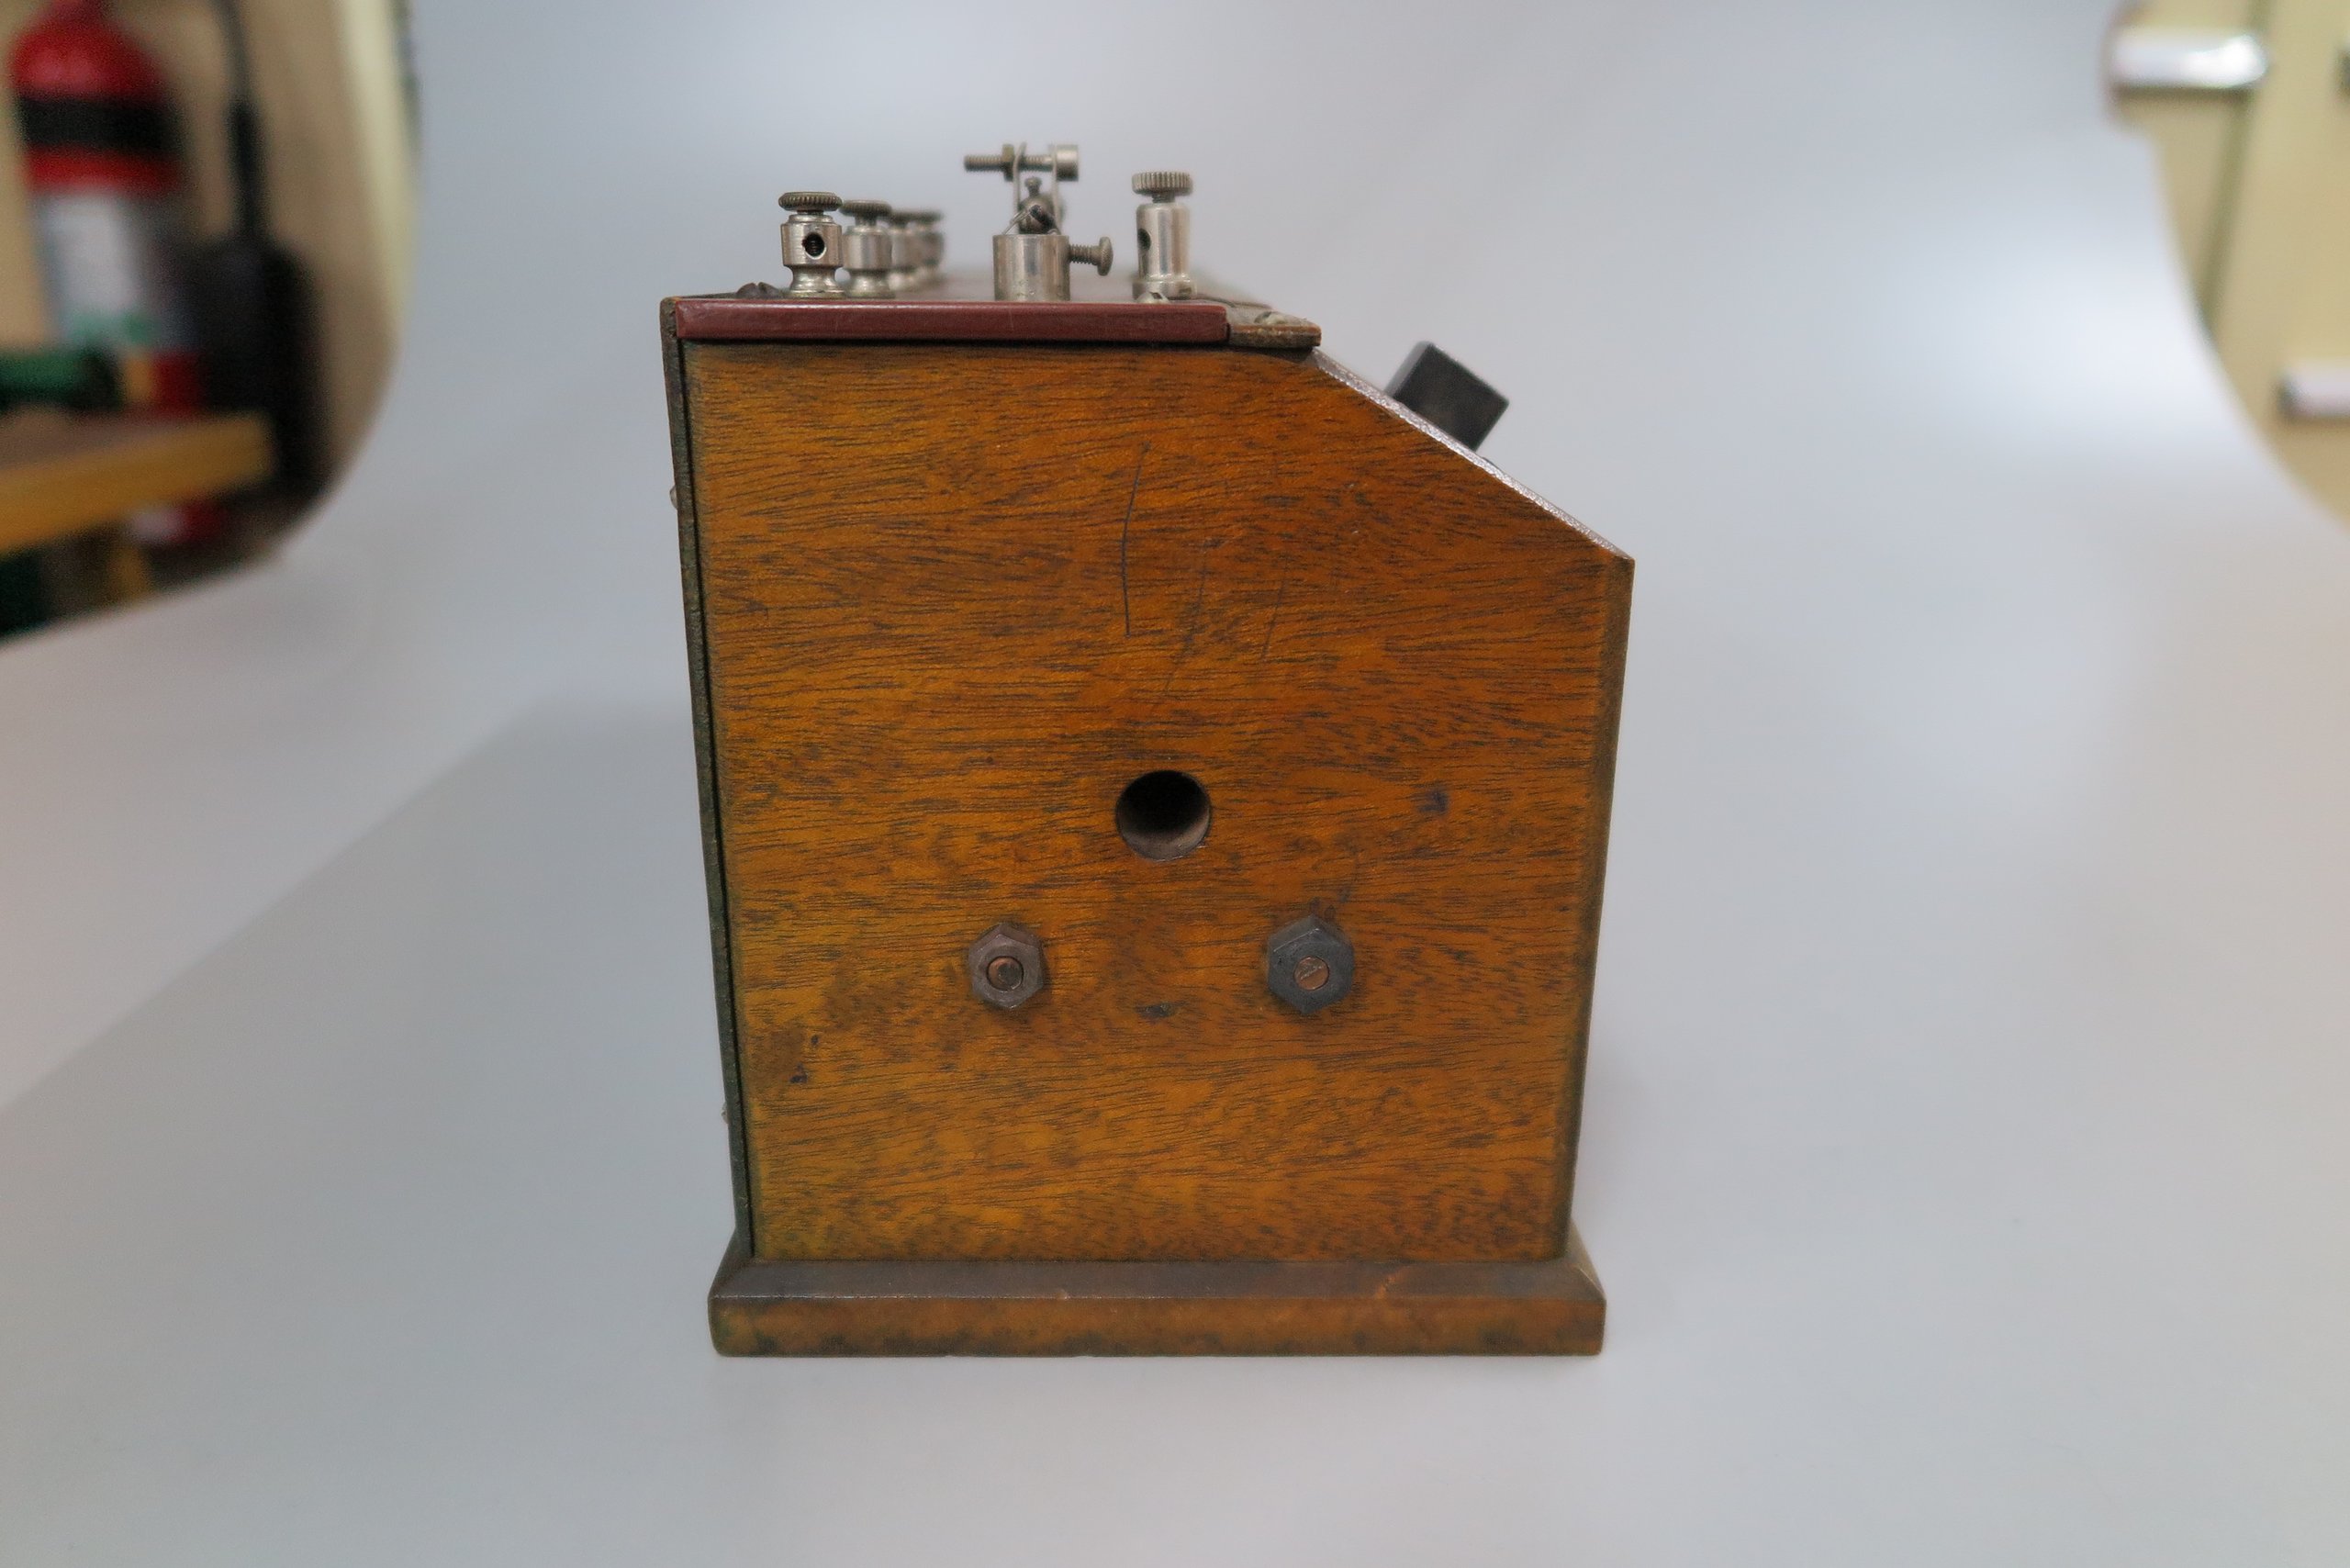 Crystal radio set made by Western Electric Co. Ltd, England, c.1923